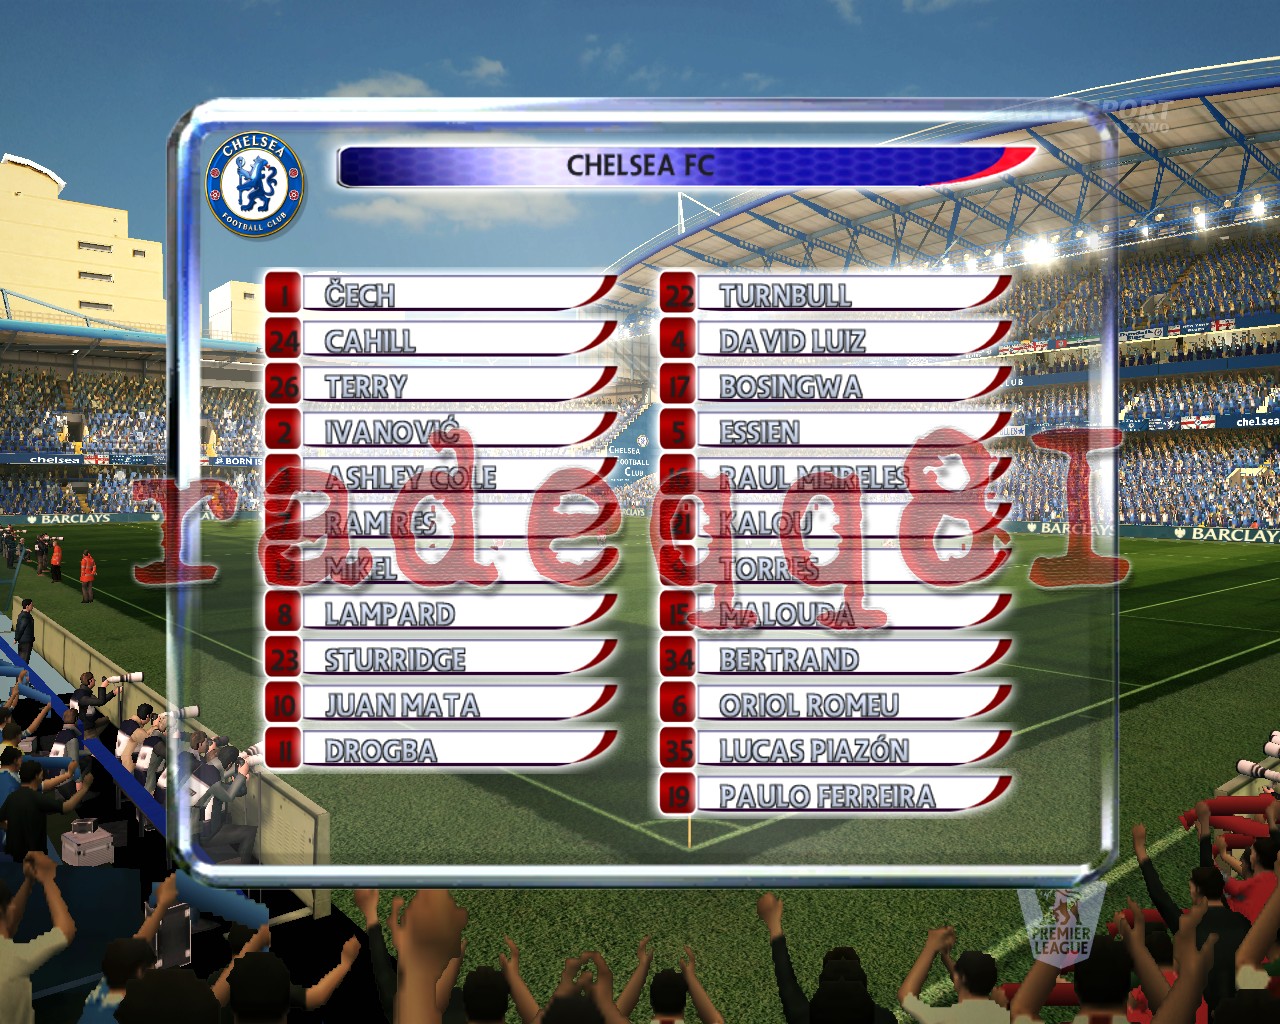 MaxTV Prva Liga scoreboard and bottom watermark image - CROPES HNL Patch  (for PES 2012) mod for Pro Evolution Soccer 2012 - Mod DB